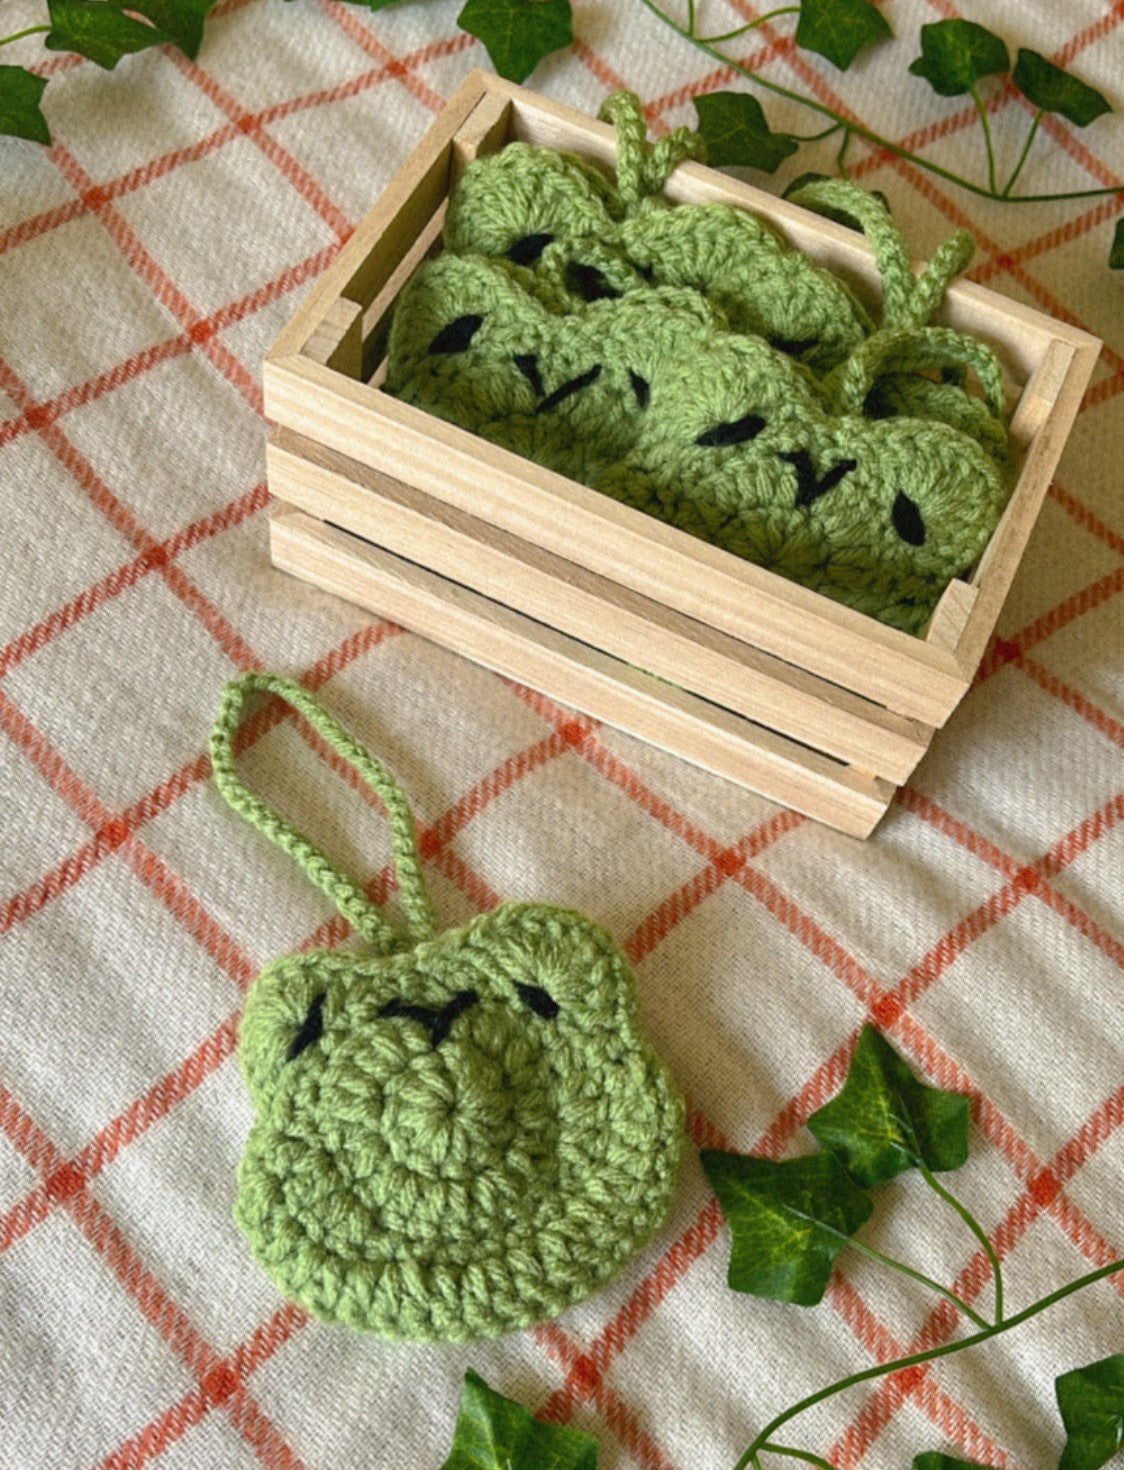 Crochet Frog Pouch | Airpod Pouch | Chapstick Holder |